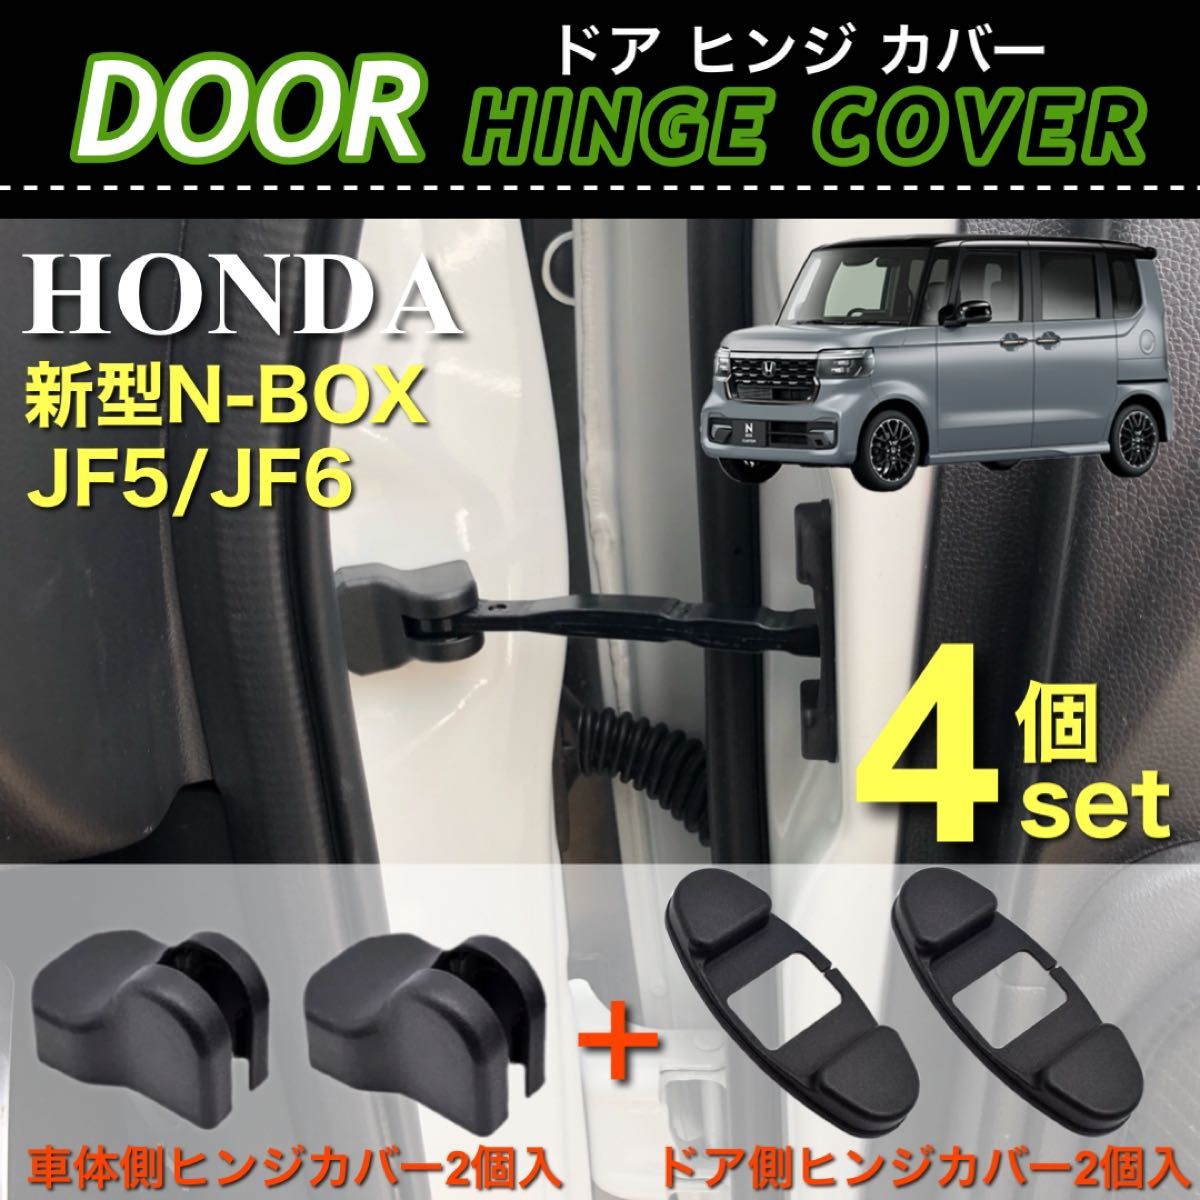 HONDA 新型 N-BOX JF5 JF6 ドア ストッパー カバー ドア ヒンジカバー 車体側 ドア側 4点セット ブラック